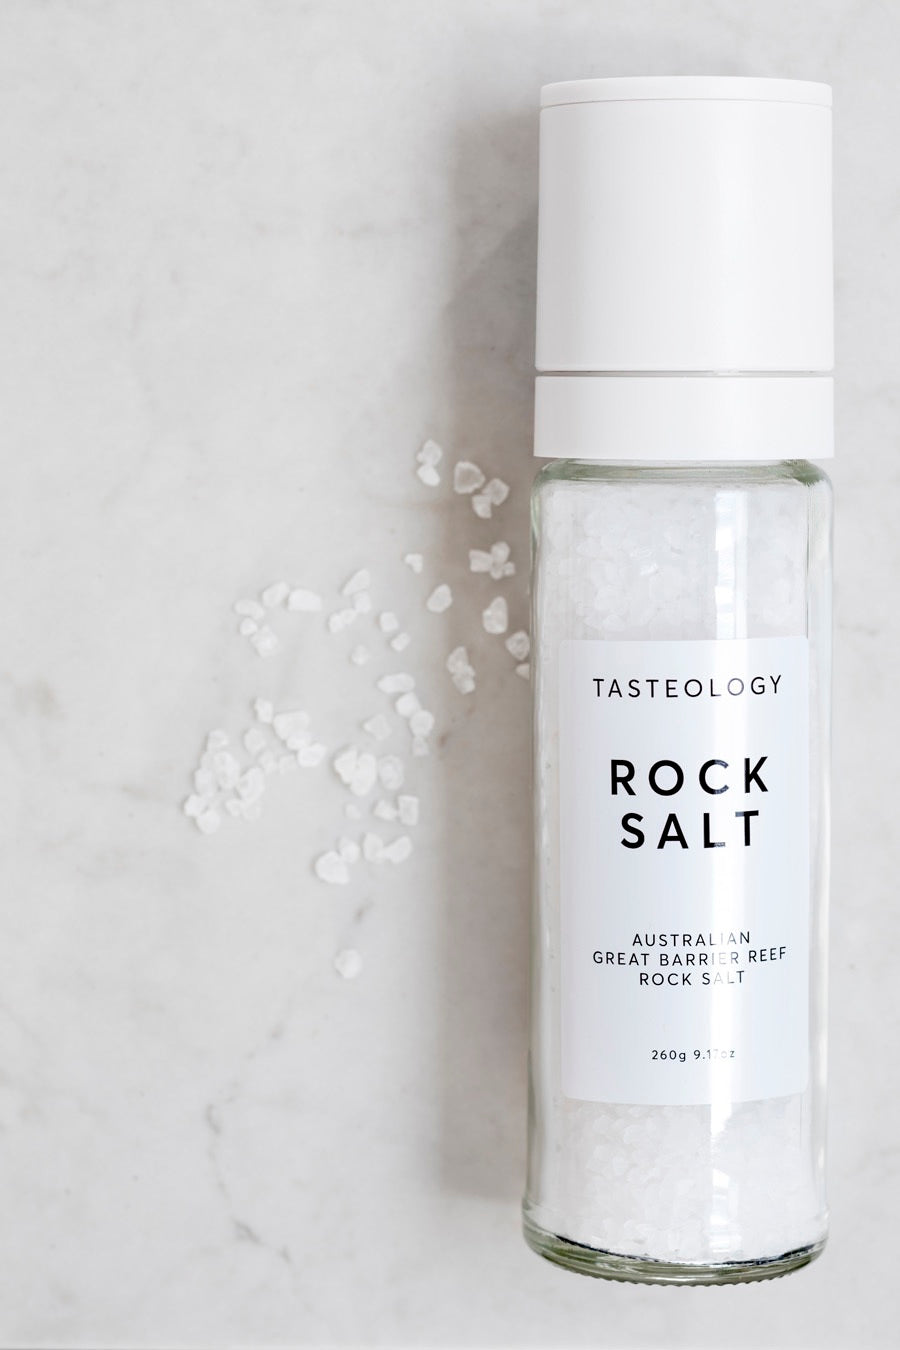 Tasteology - Great Barrier Reef Rock salt